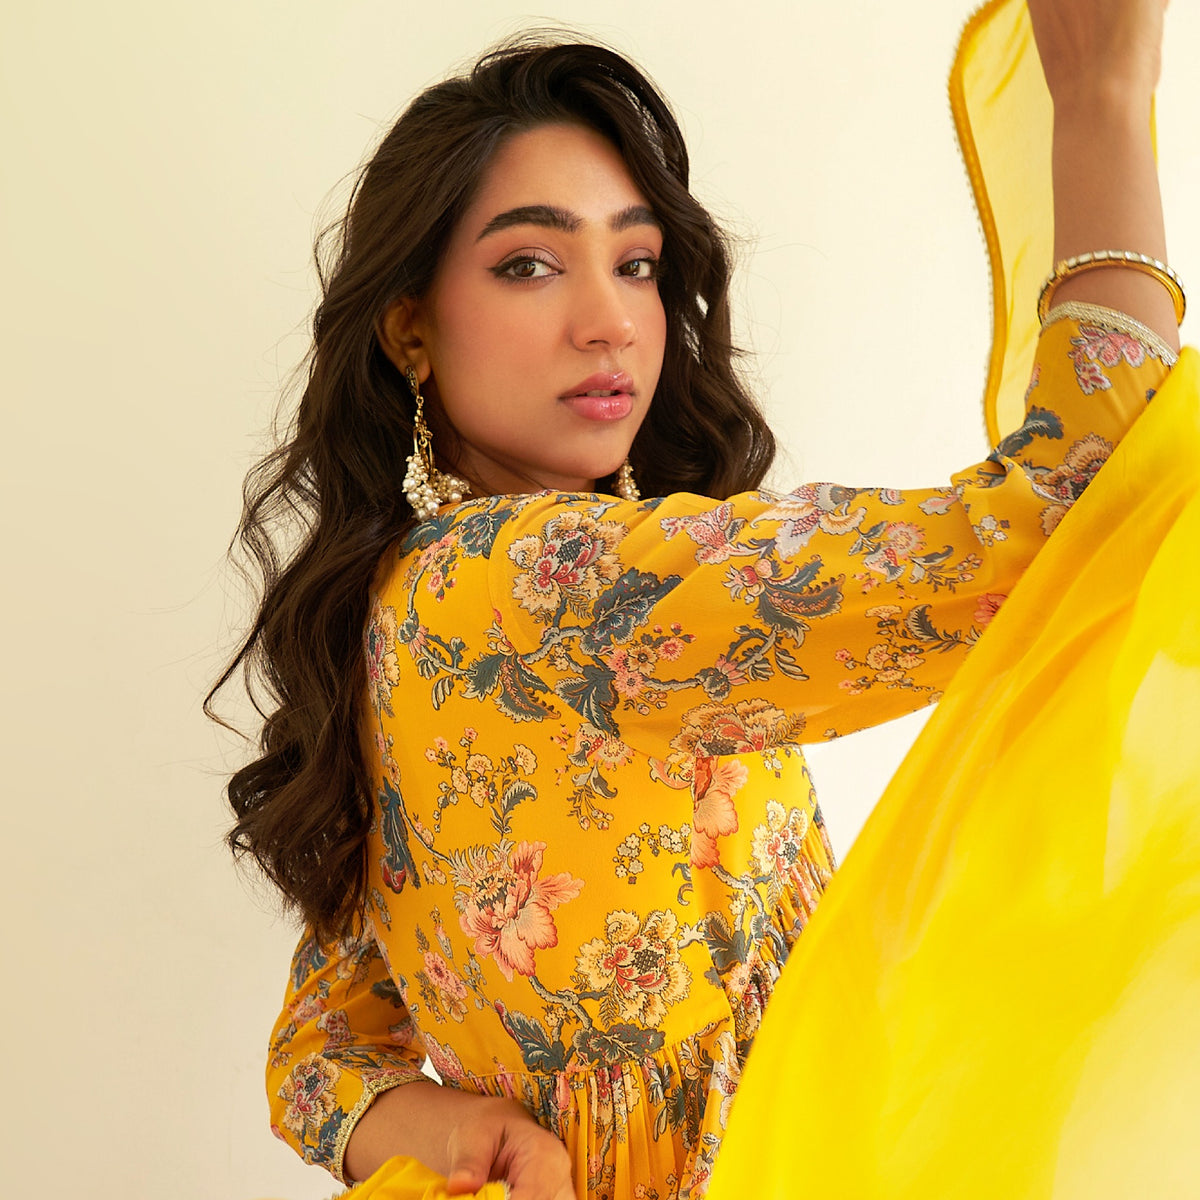 Ria Fashions - Buy Women’s Indian Kurtis / Kurtas and Tunics Online